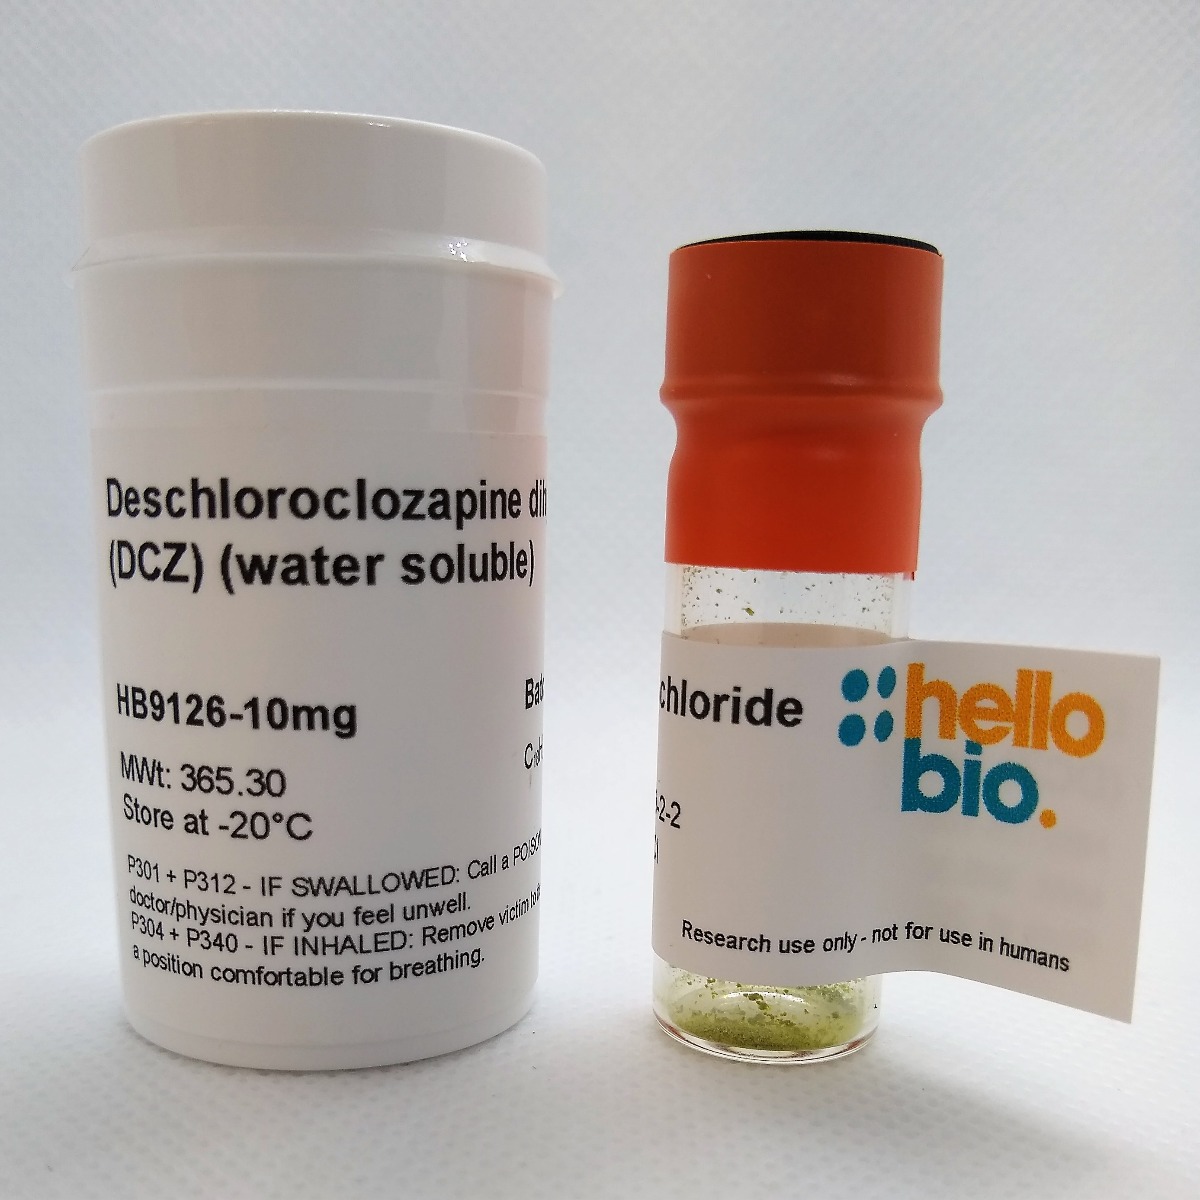 Deschloroclozapine dihydrochloride (DCZ) (water soluble) product vial image | Hello Bio